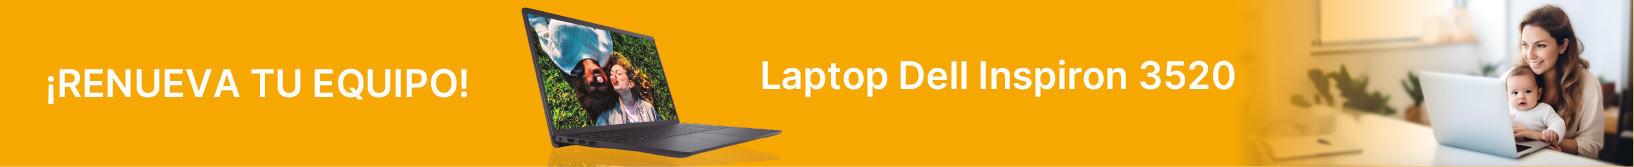 Banner promocional Laptop Dell Inspiron 3520